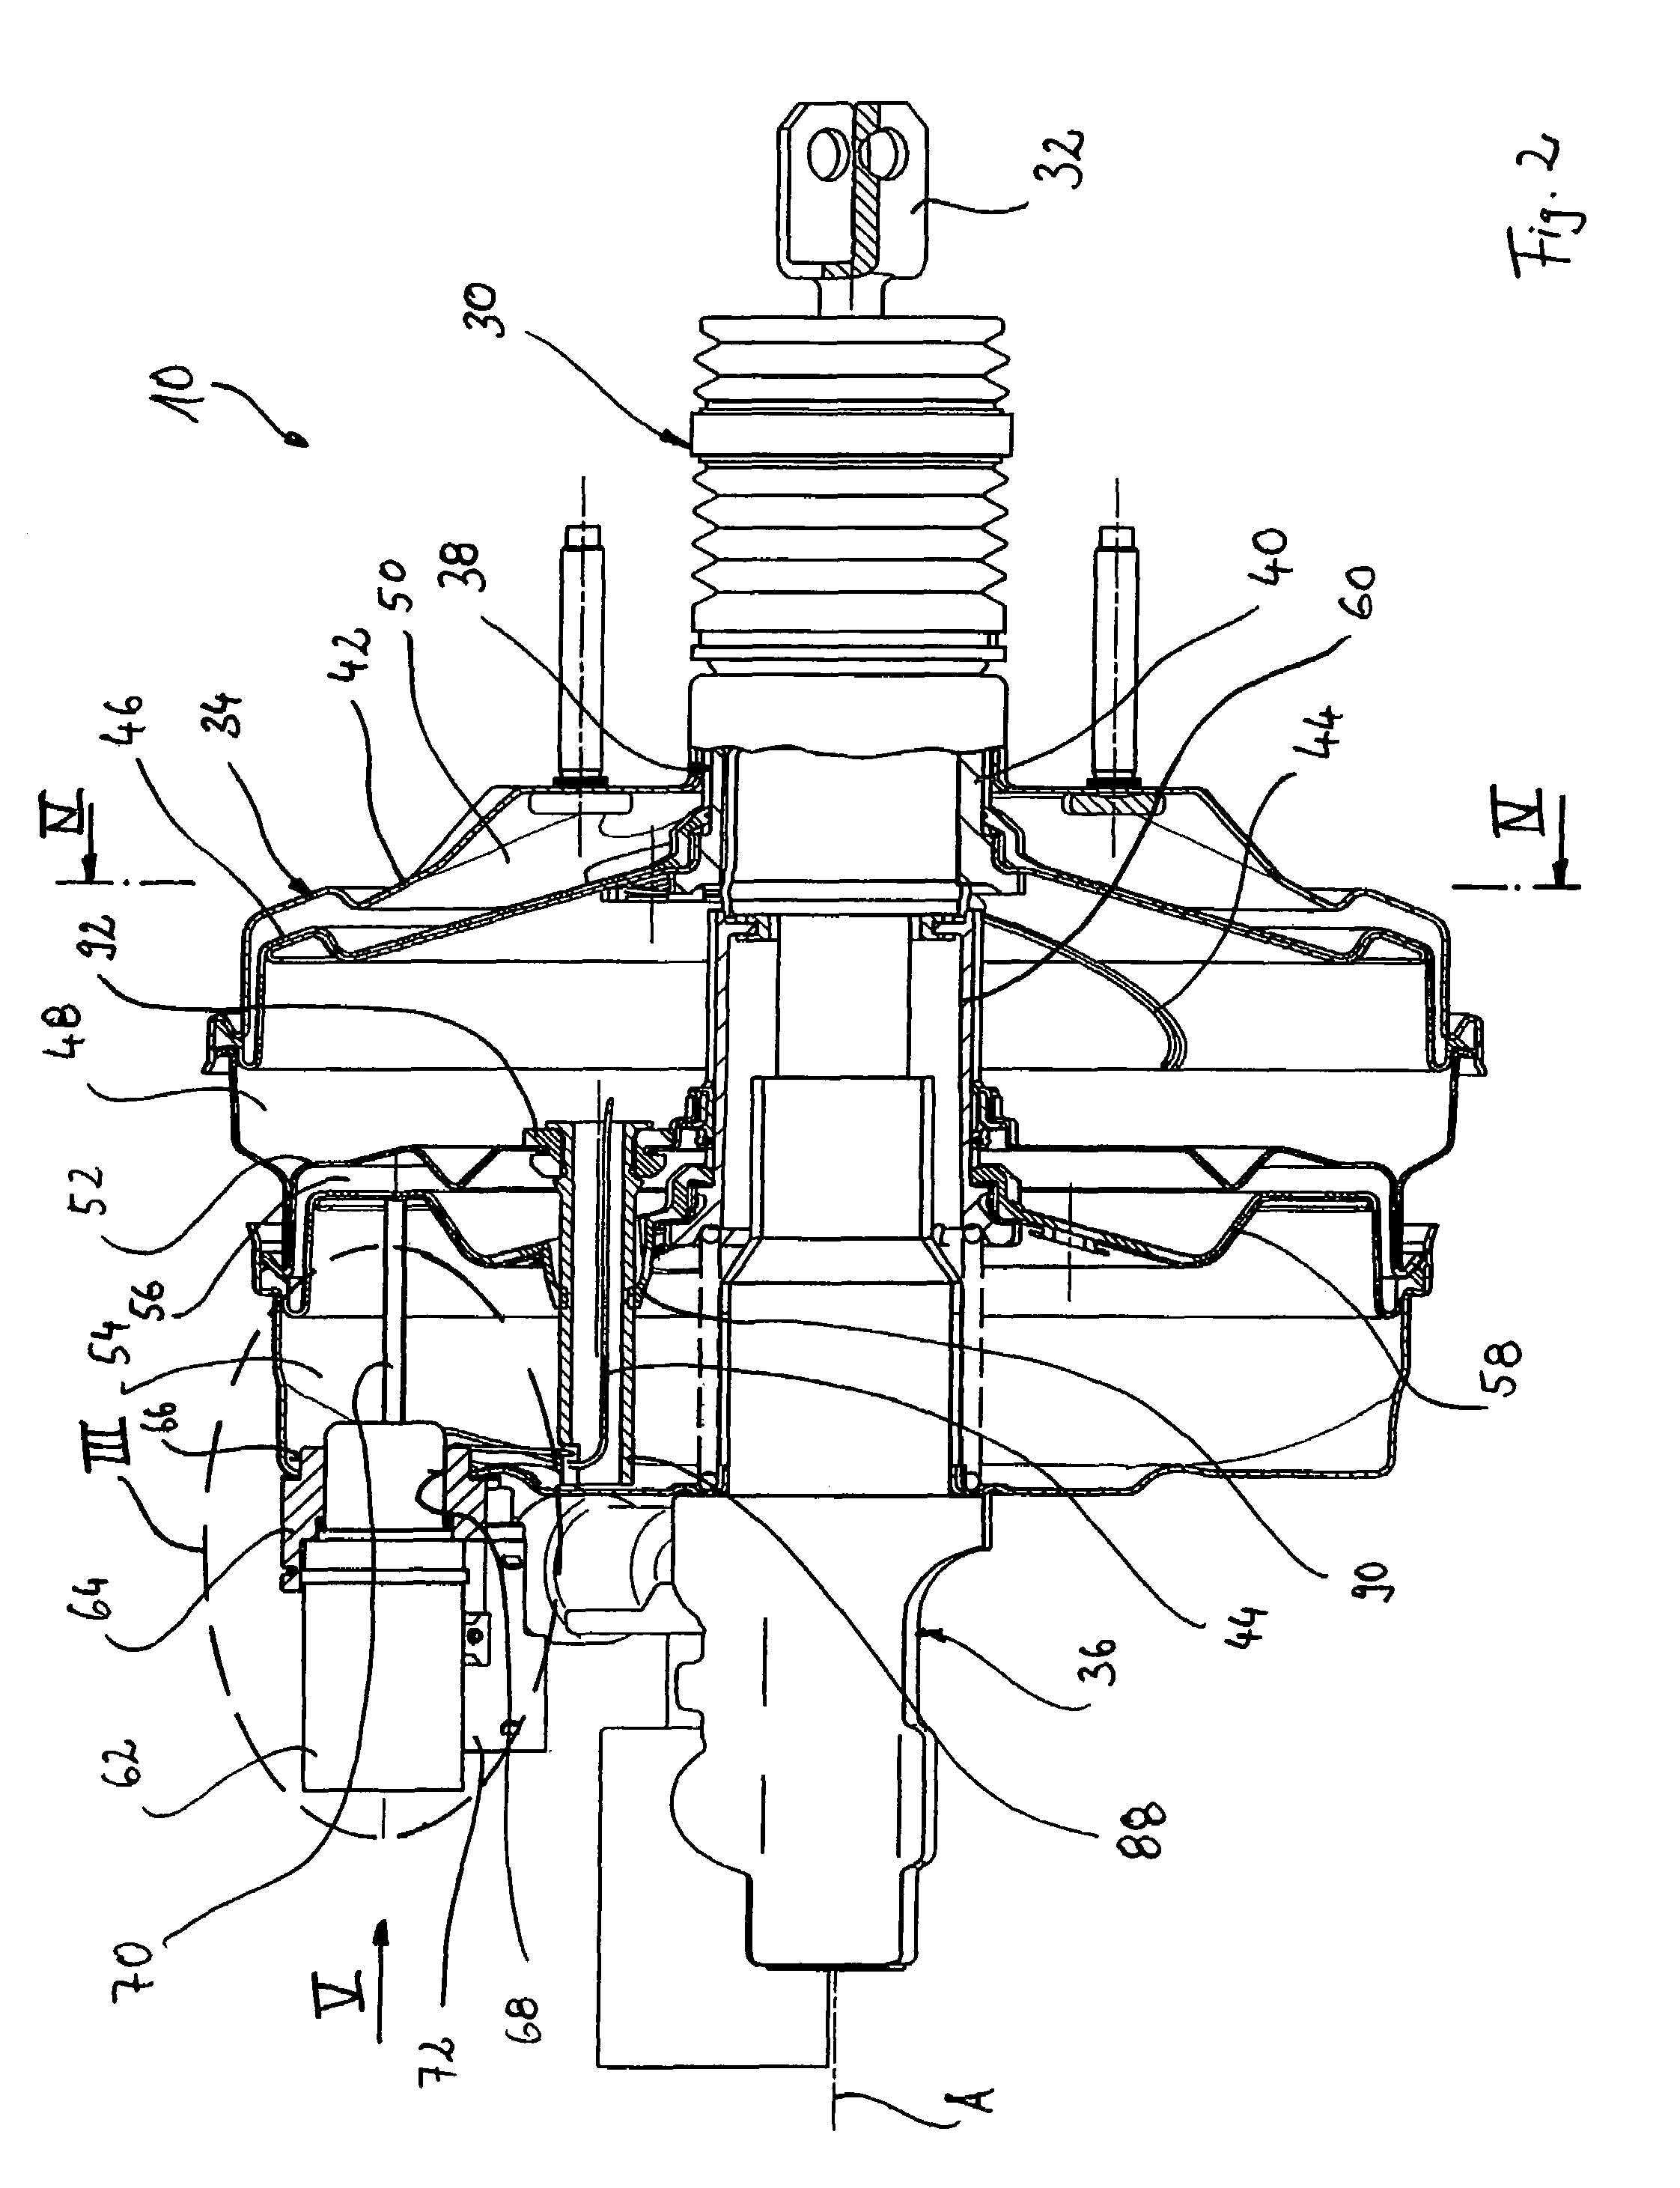 Braking force generator for a hydraulic vehicle brake system